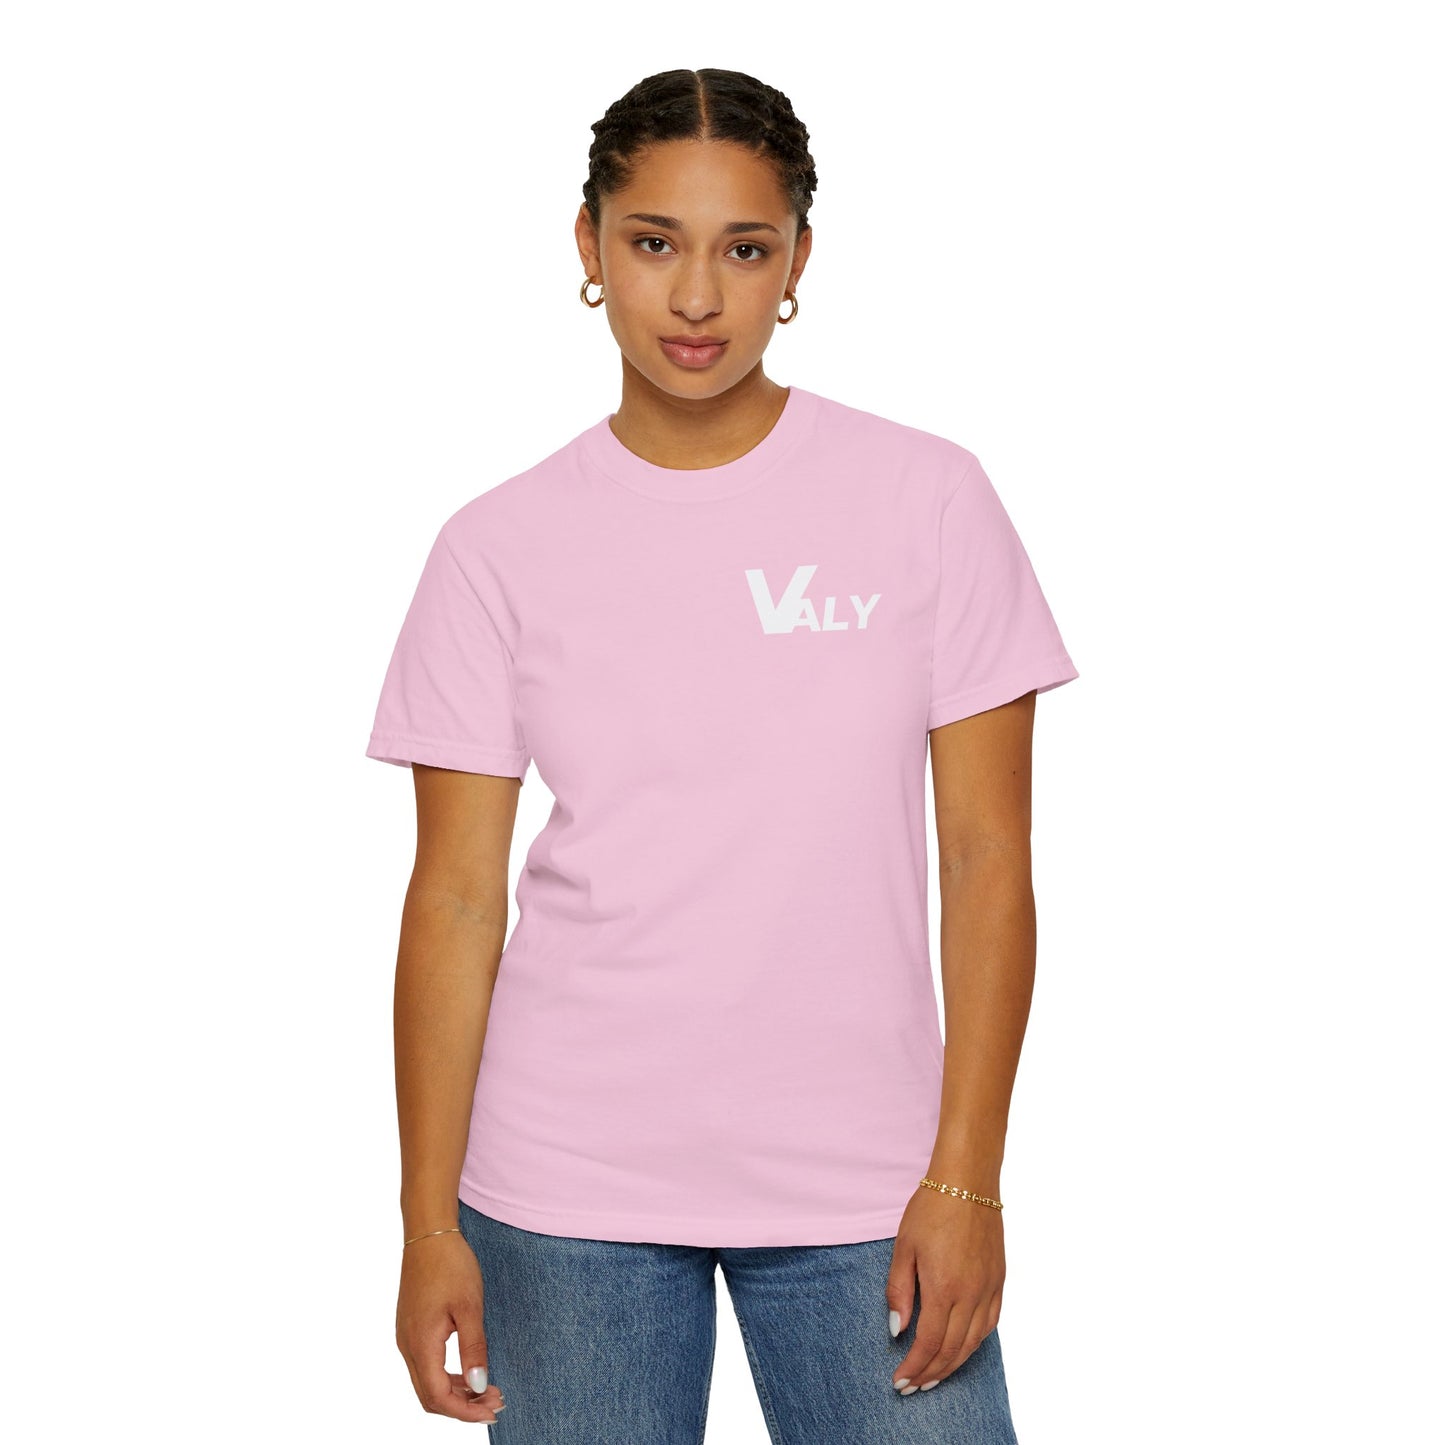 VALY Original T-Shirt - Light Pink